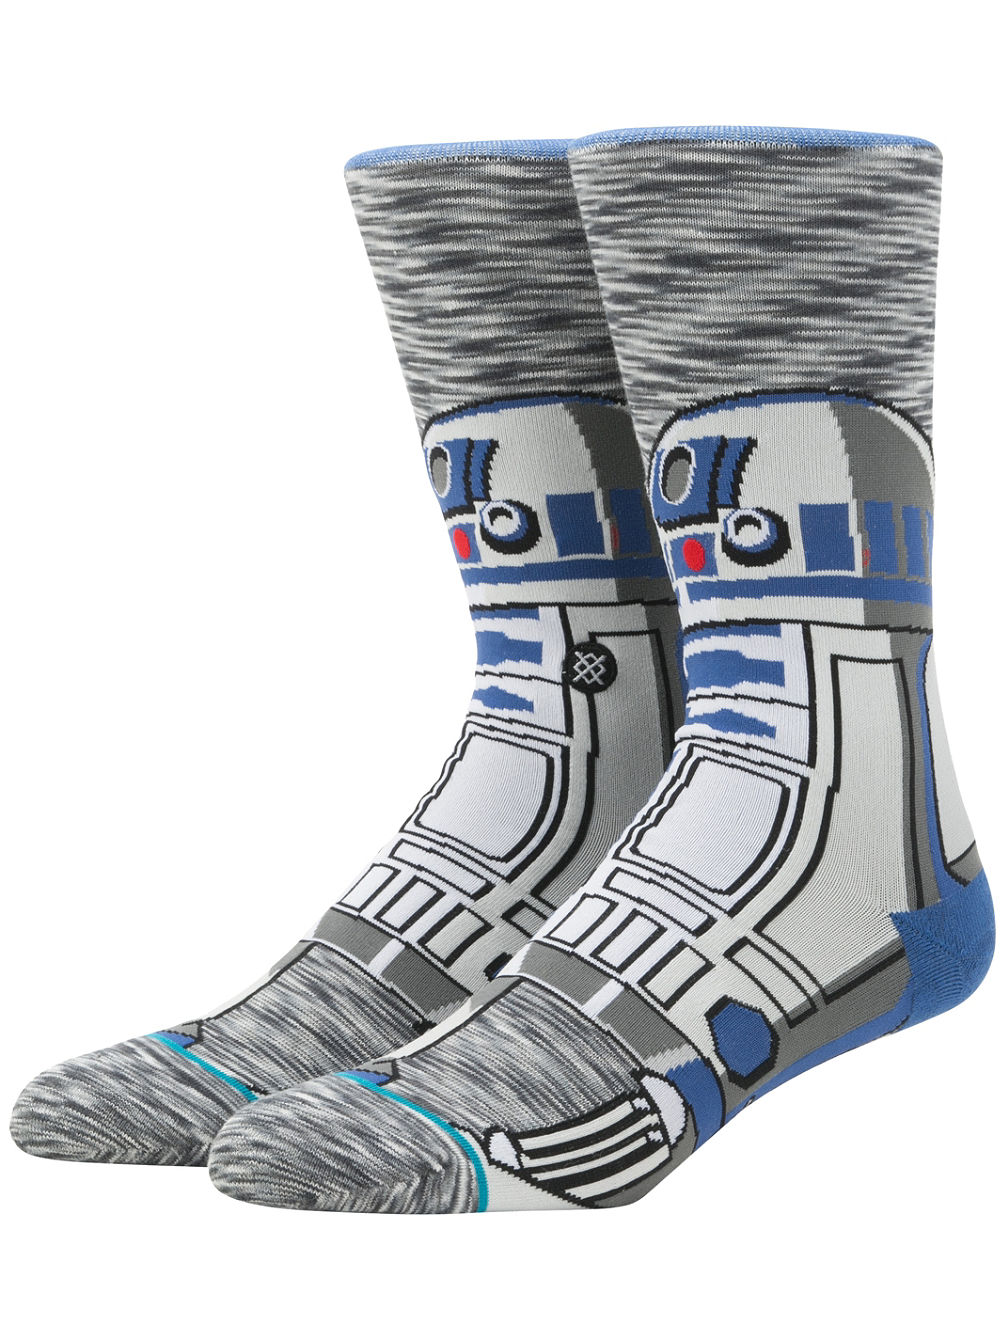 R2 Unit Star Wars Calze